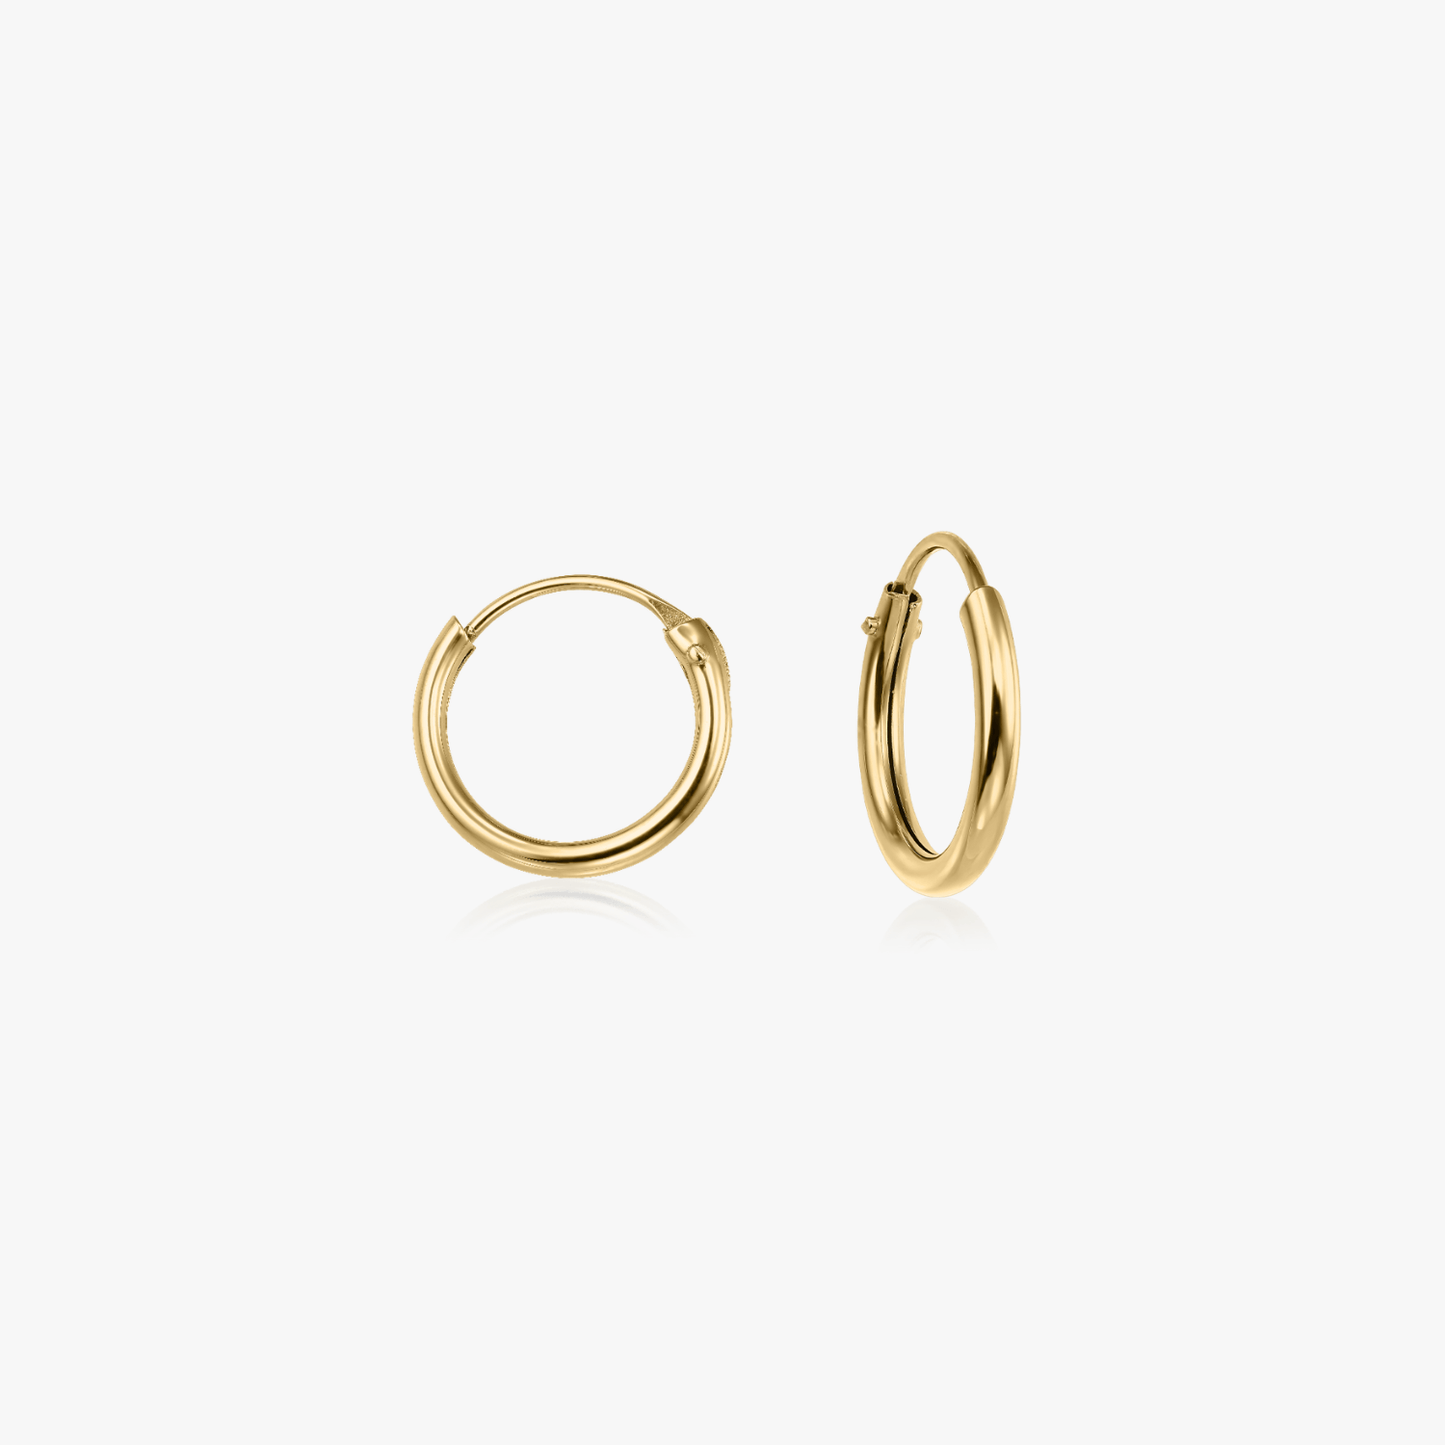 Small Hoops gold earrings - 12 mm